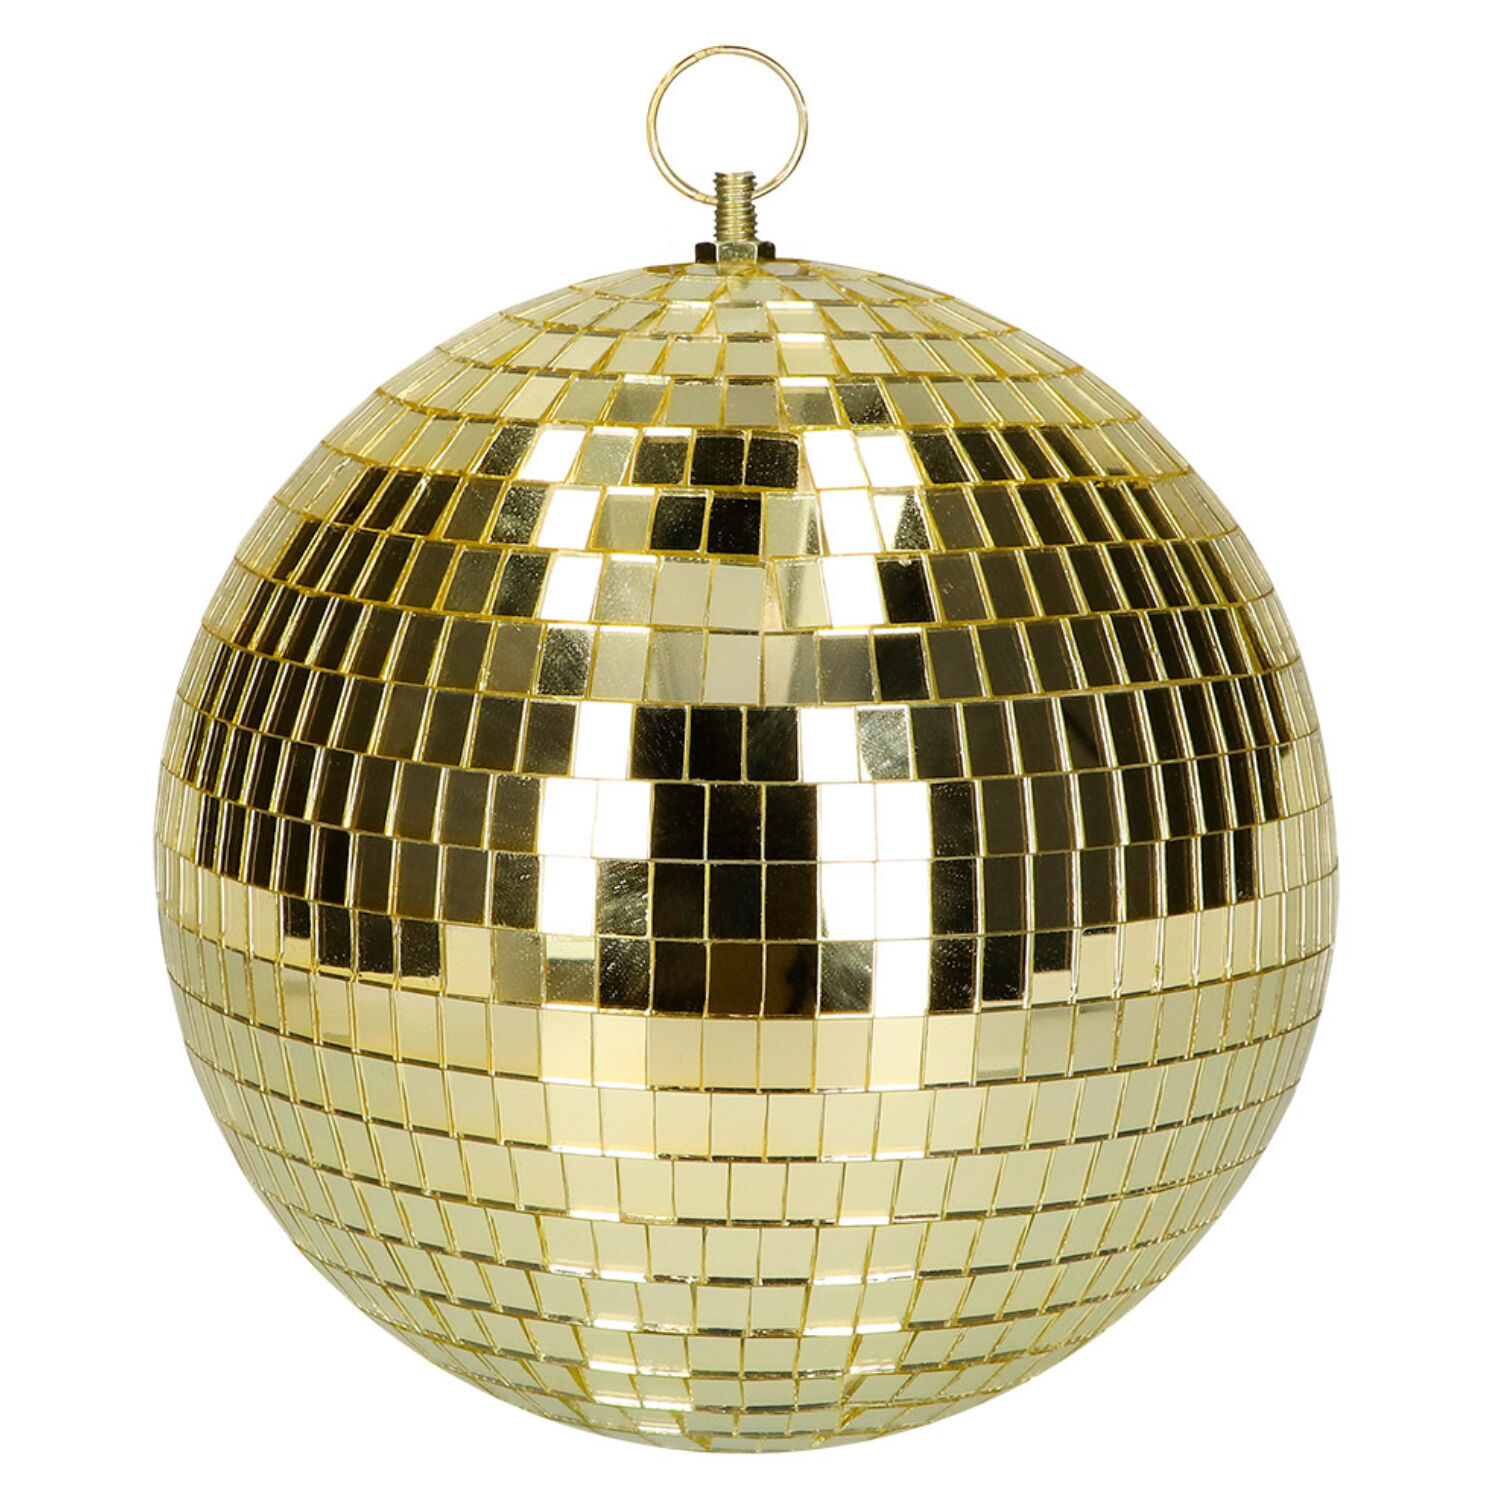 NEU Disco-Kugel gold, Ø20cm, mit Aufhänger - Disco-Party & 80er